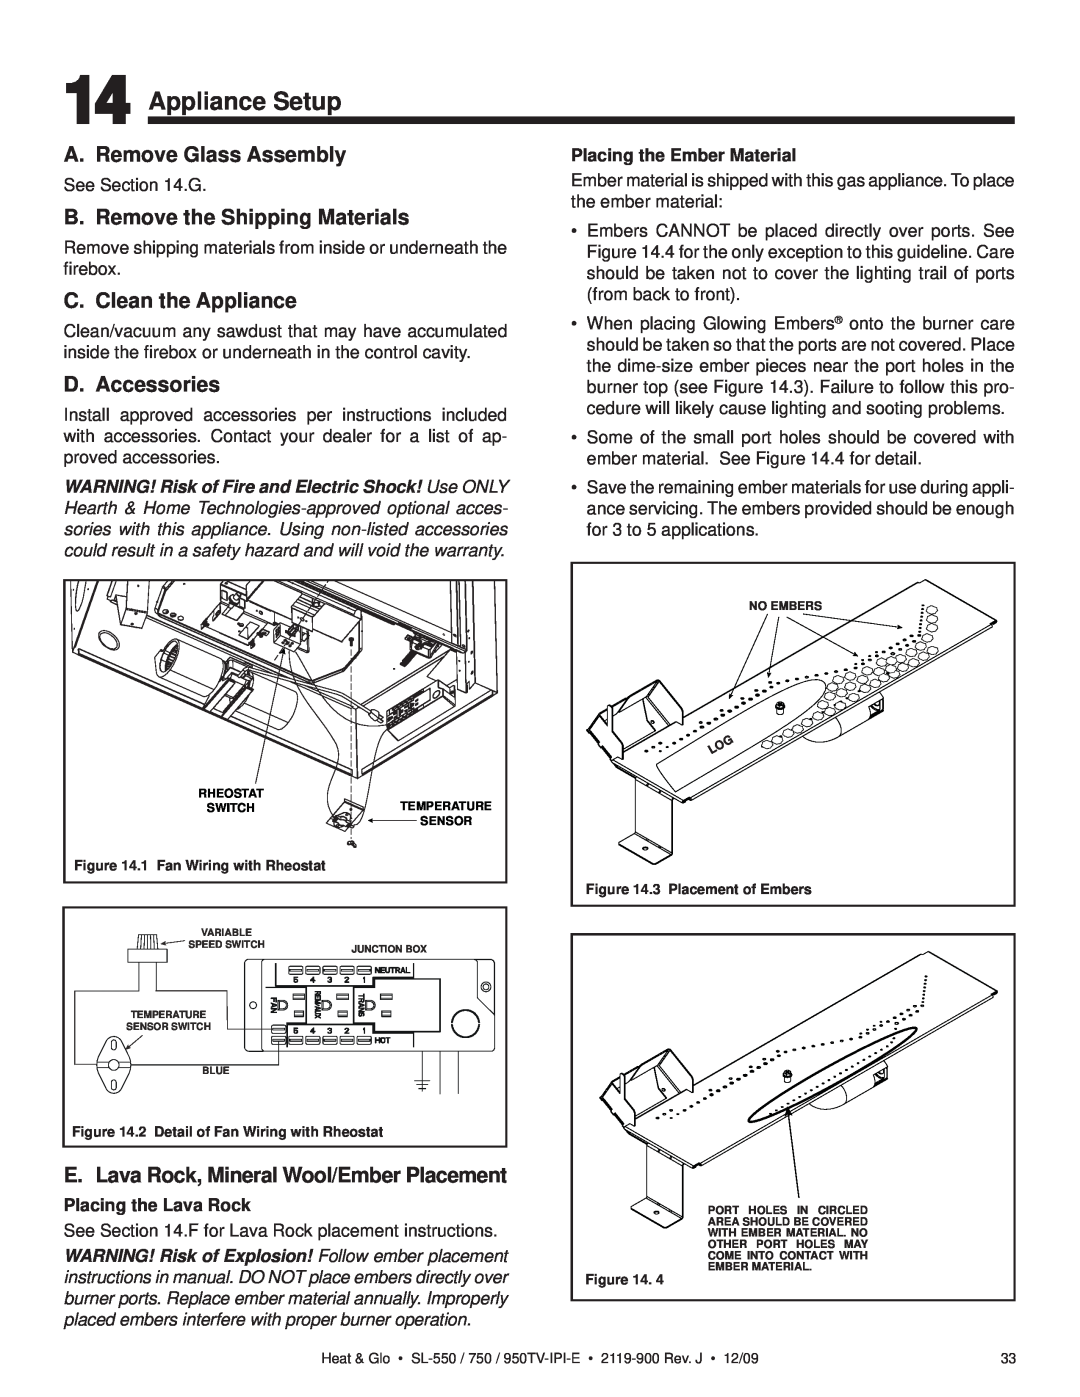 Heat & Glo LifeStyle SL-950TV-IPI-E Appliance Setup, A. Remove Glass Assembly, B. Remove the Shipping Materials 